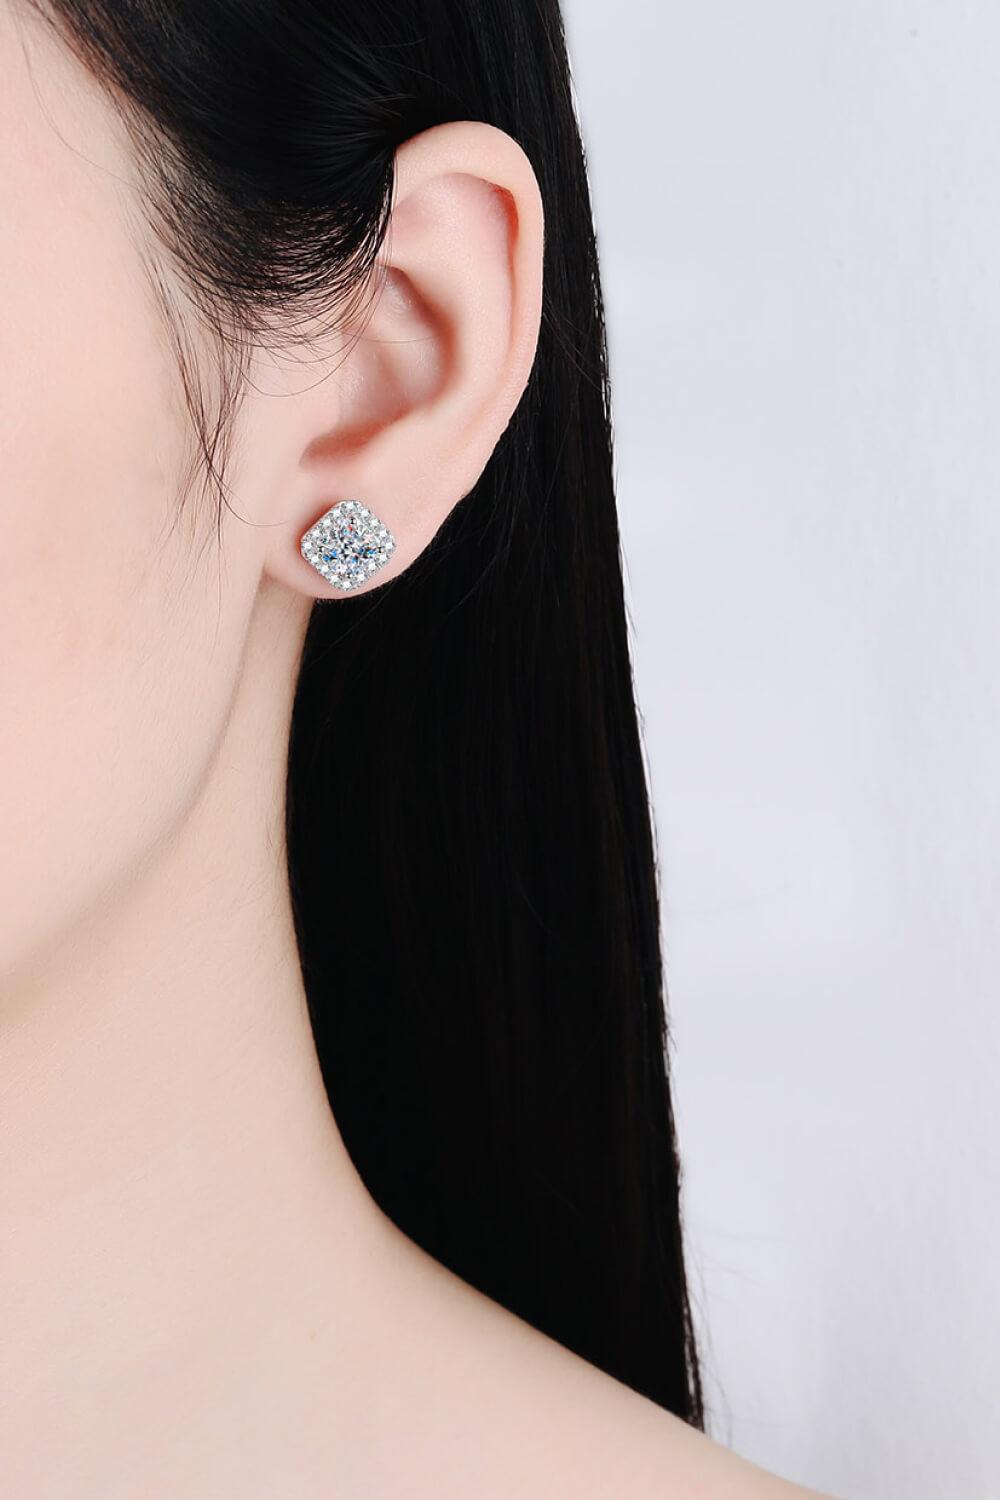 Elegant 2 Carat Moissanite Square Stud Earrings - MXSTUDIO.COM